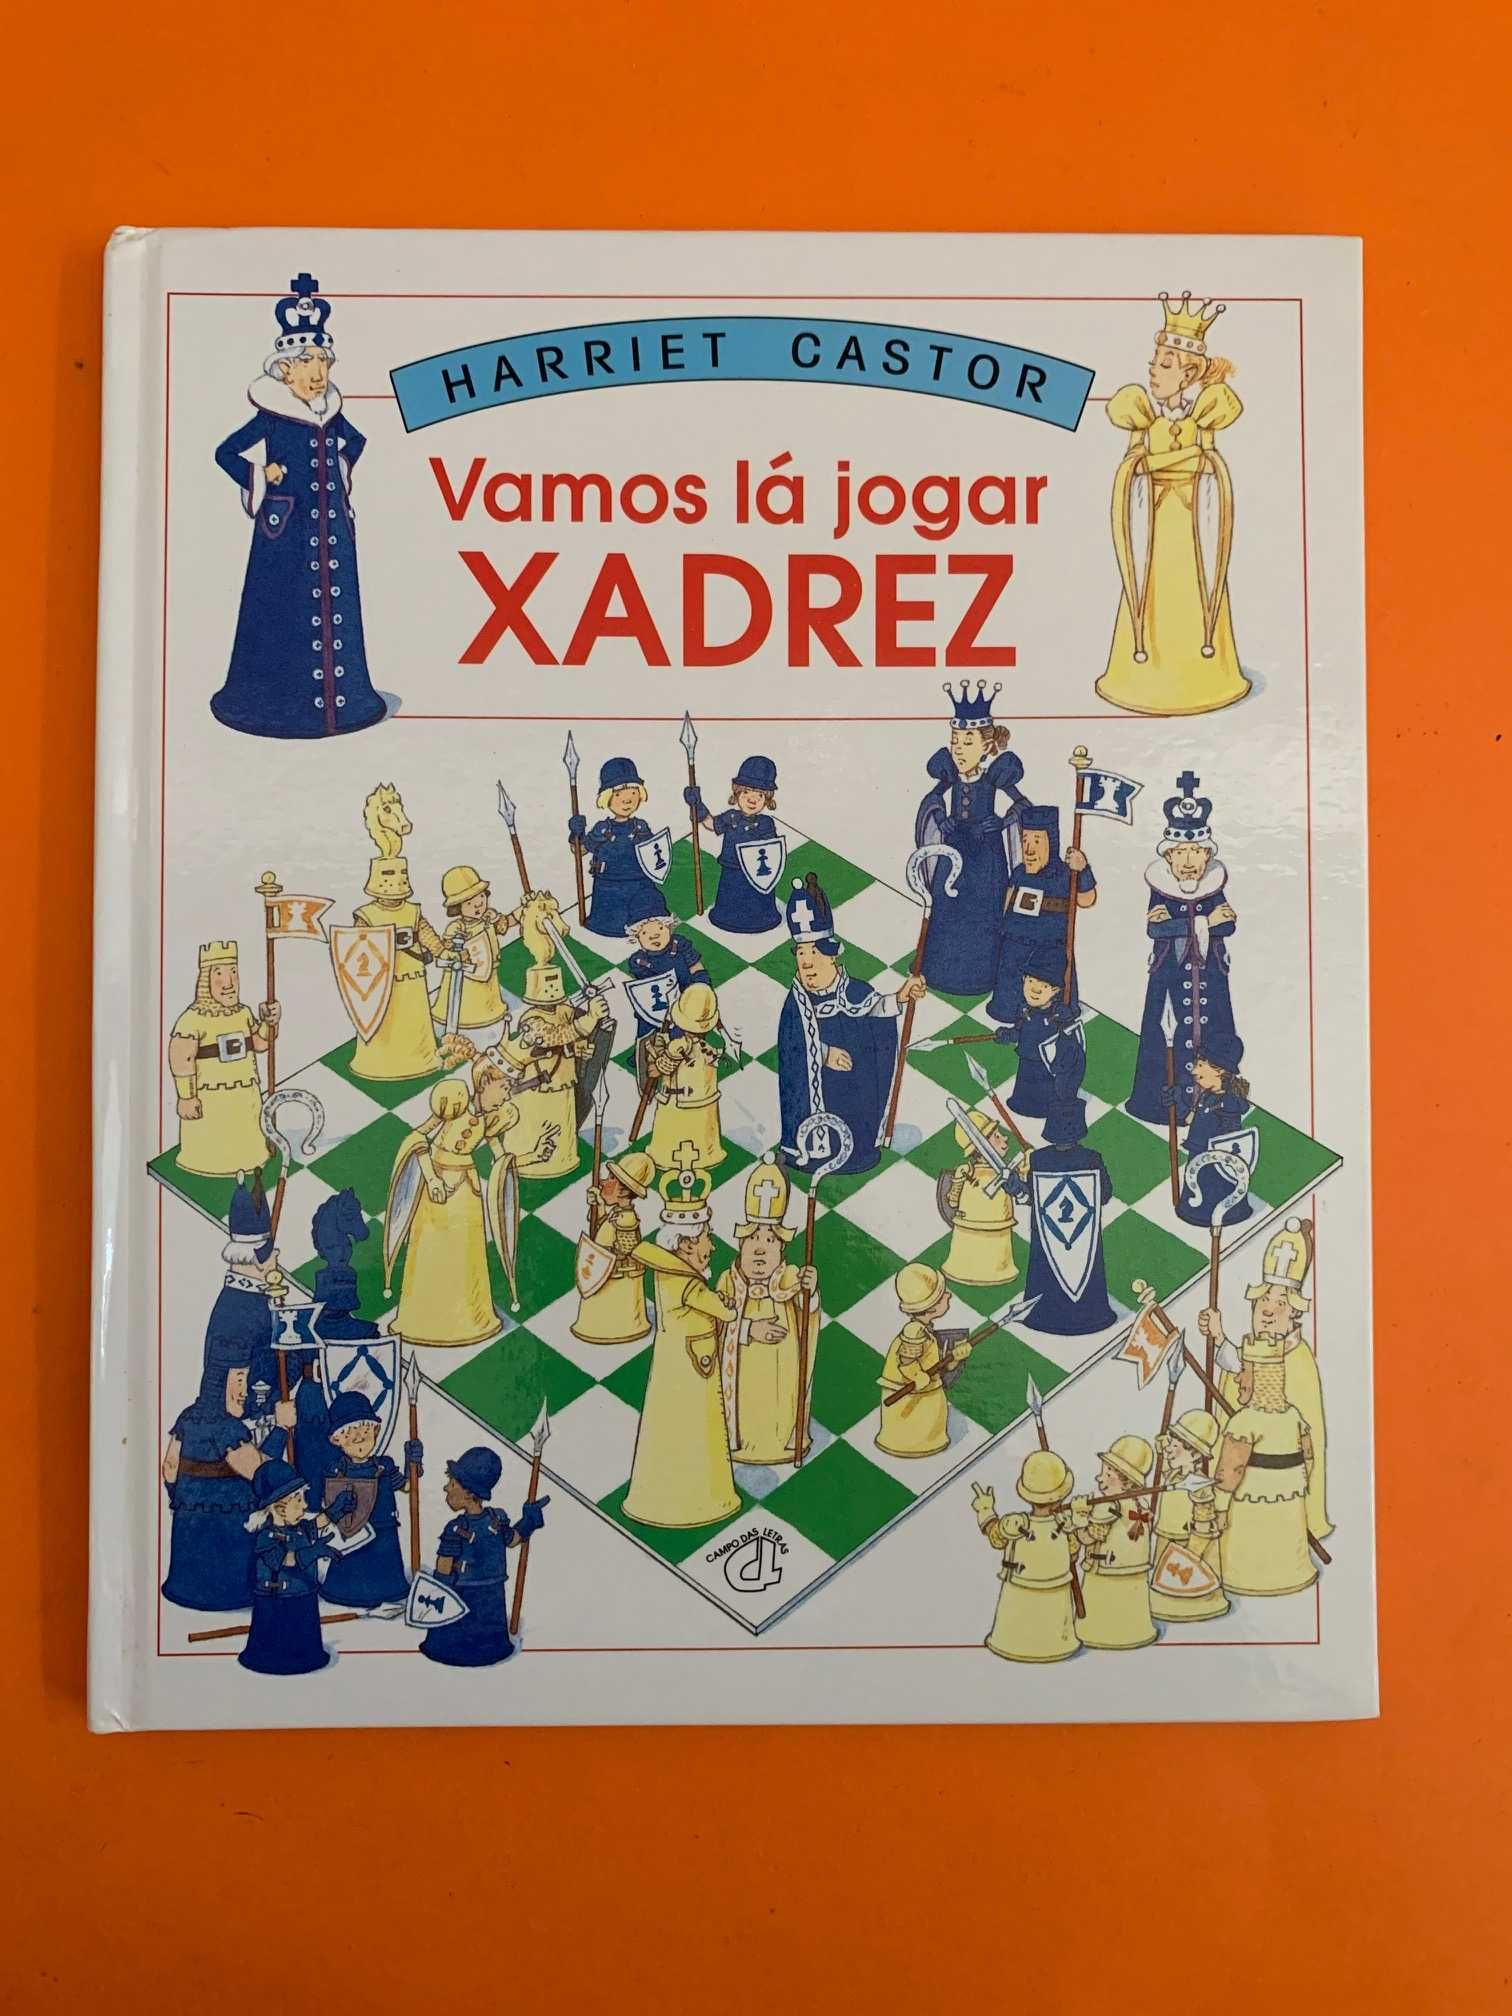 Vamos lá jogar Xadrez - Harriet Castor